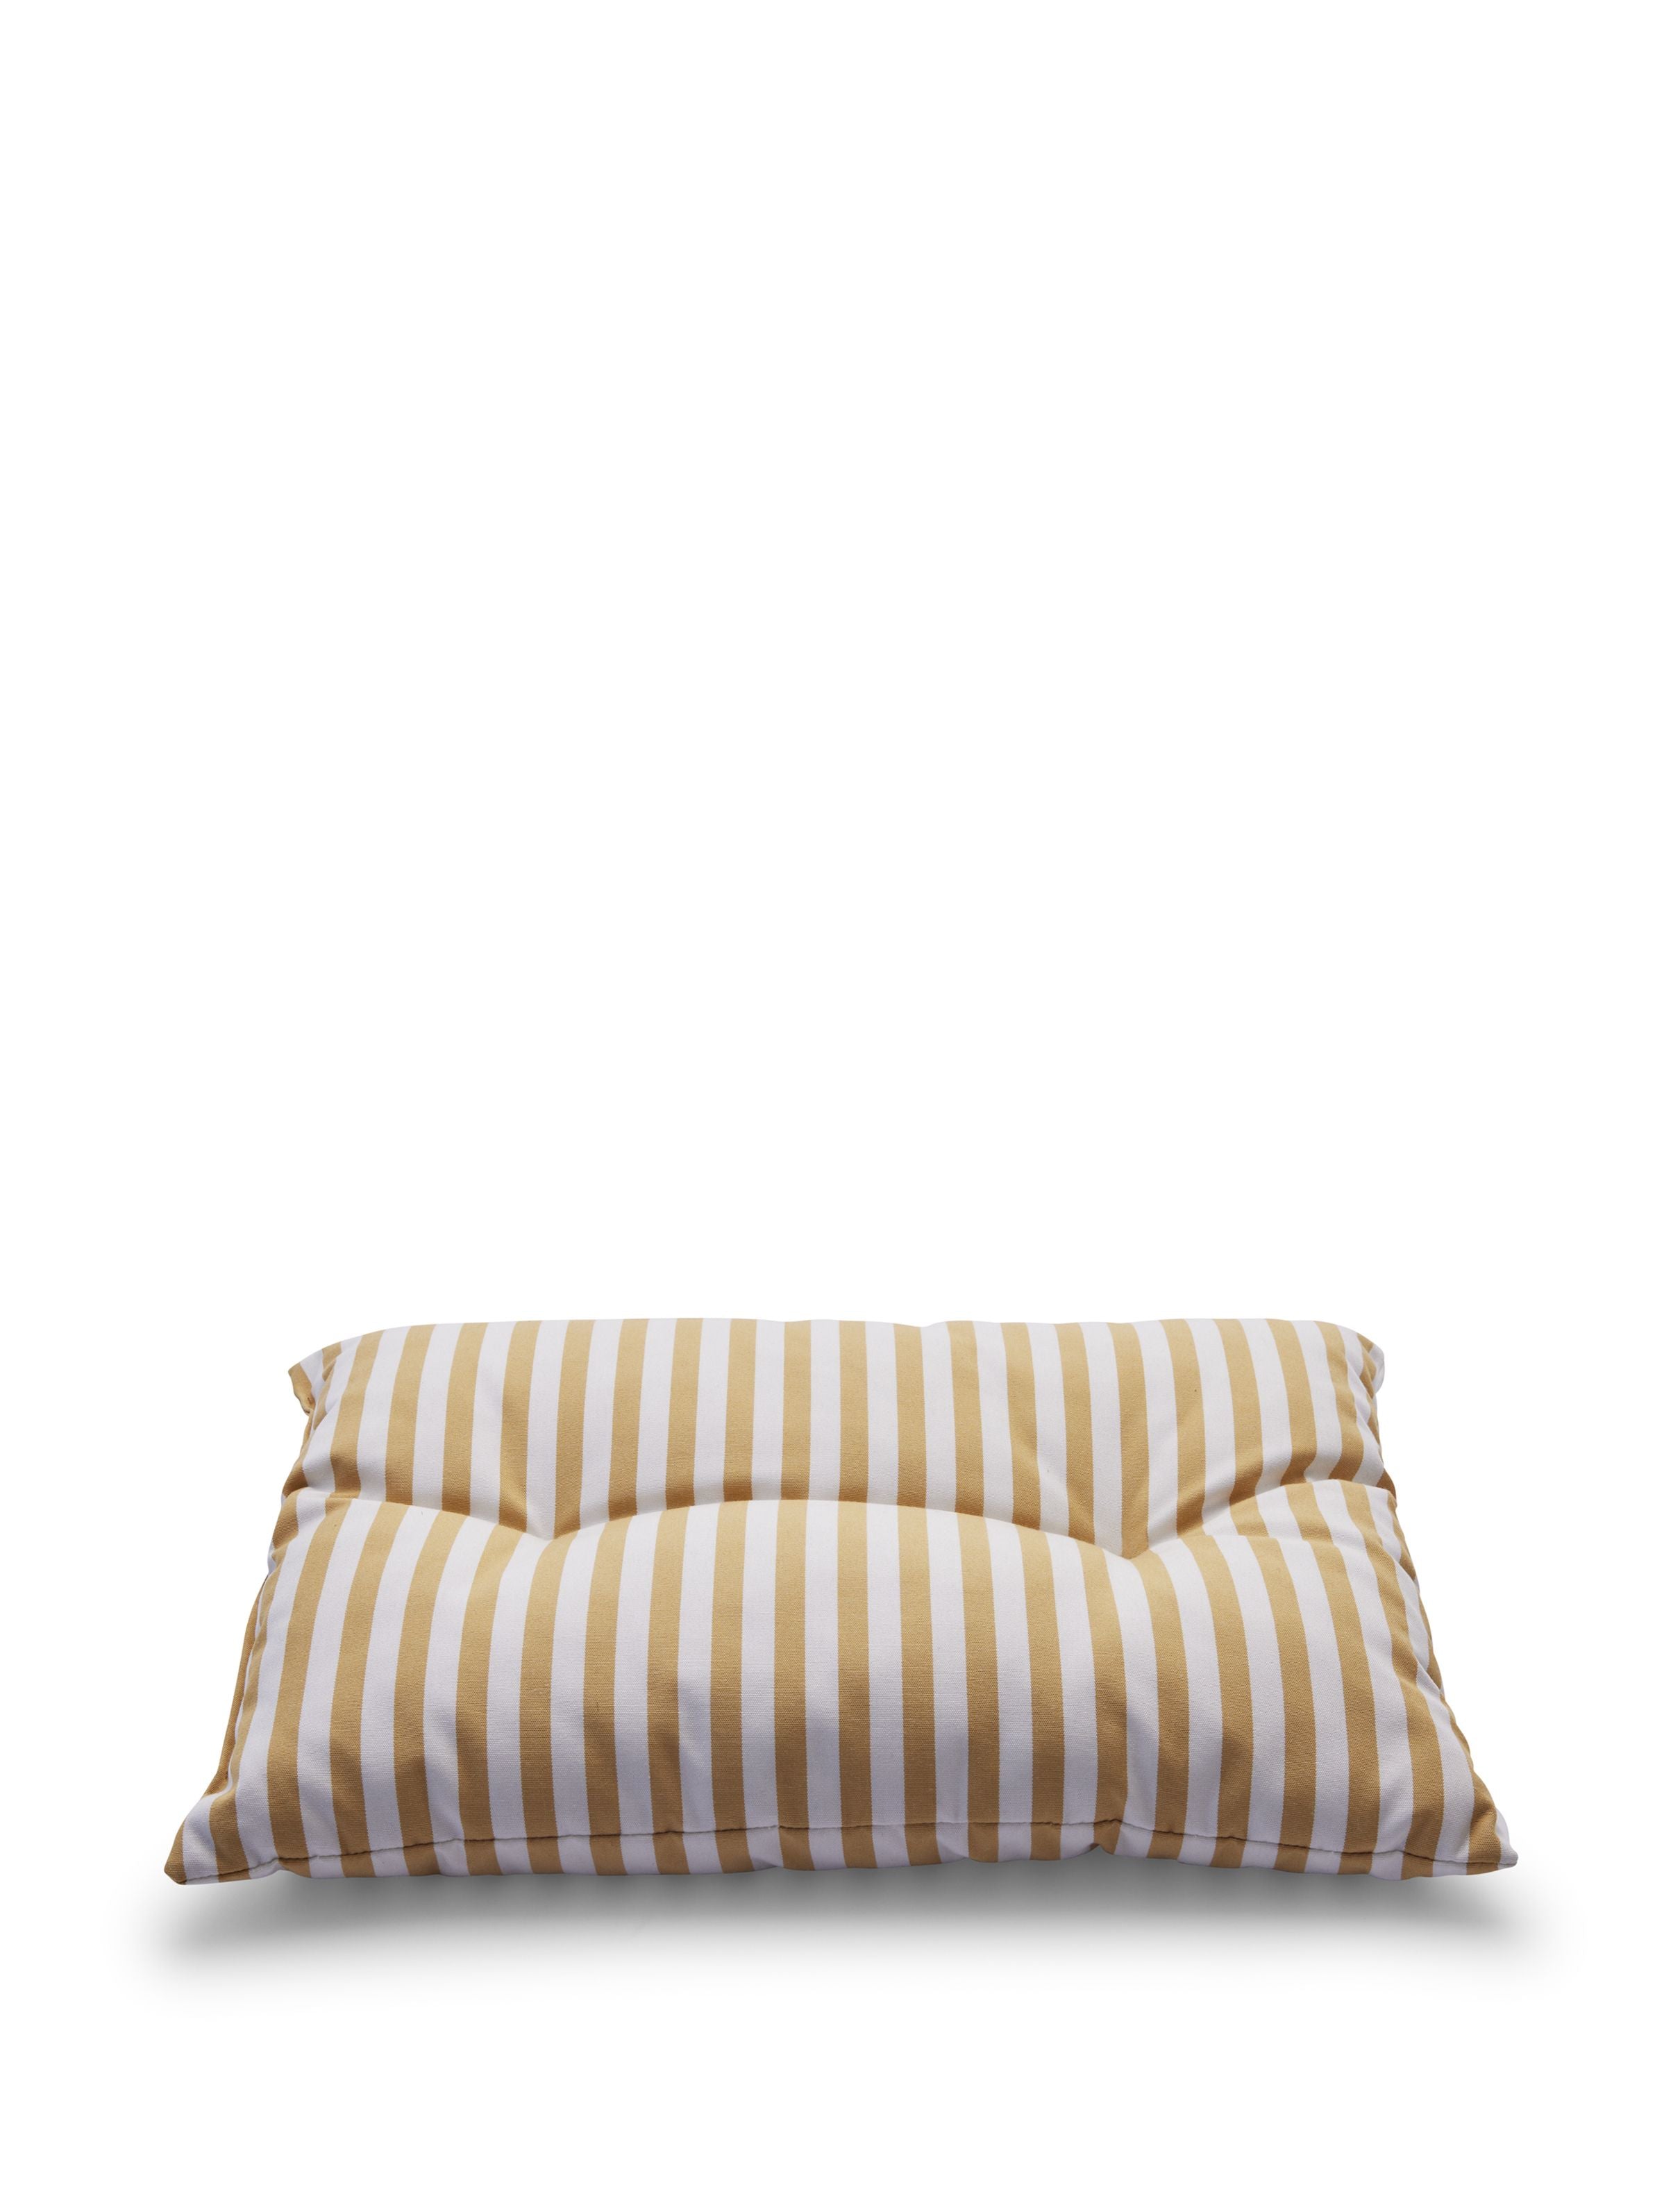 Skagerak Barriere Cushion 55x43 cm, gouden gele streep